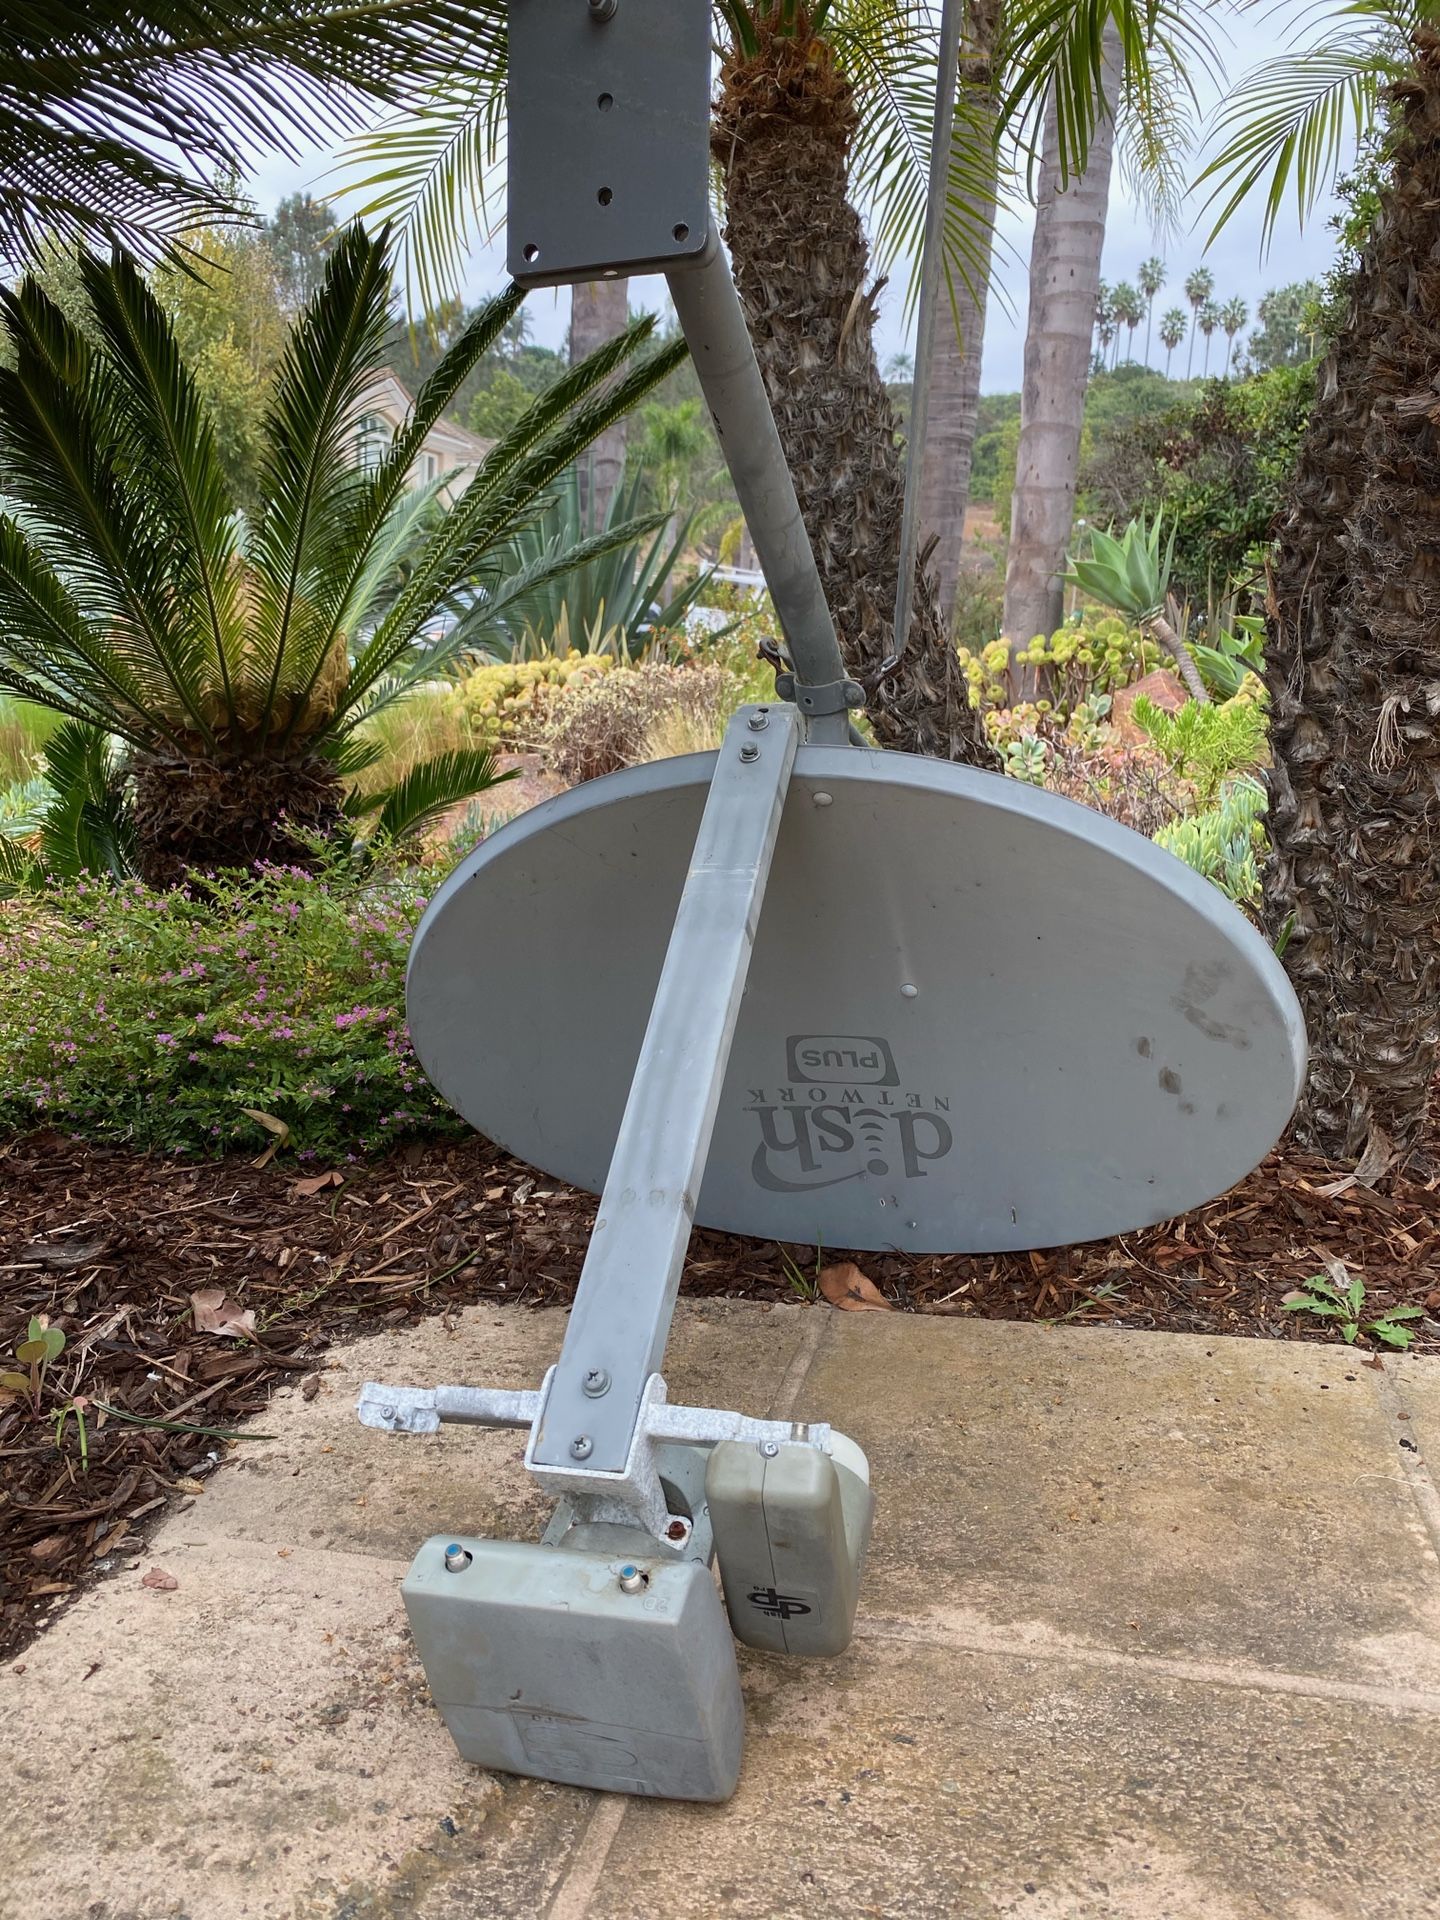 Dish Network Plus Satellite Antenna